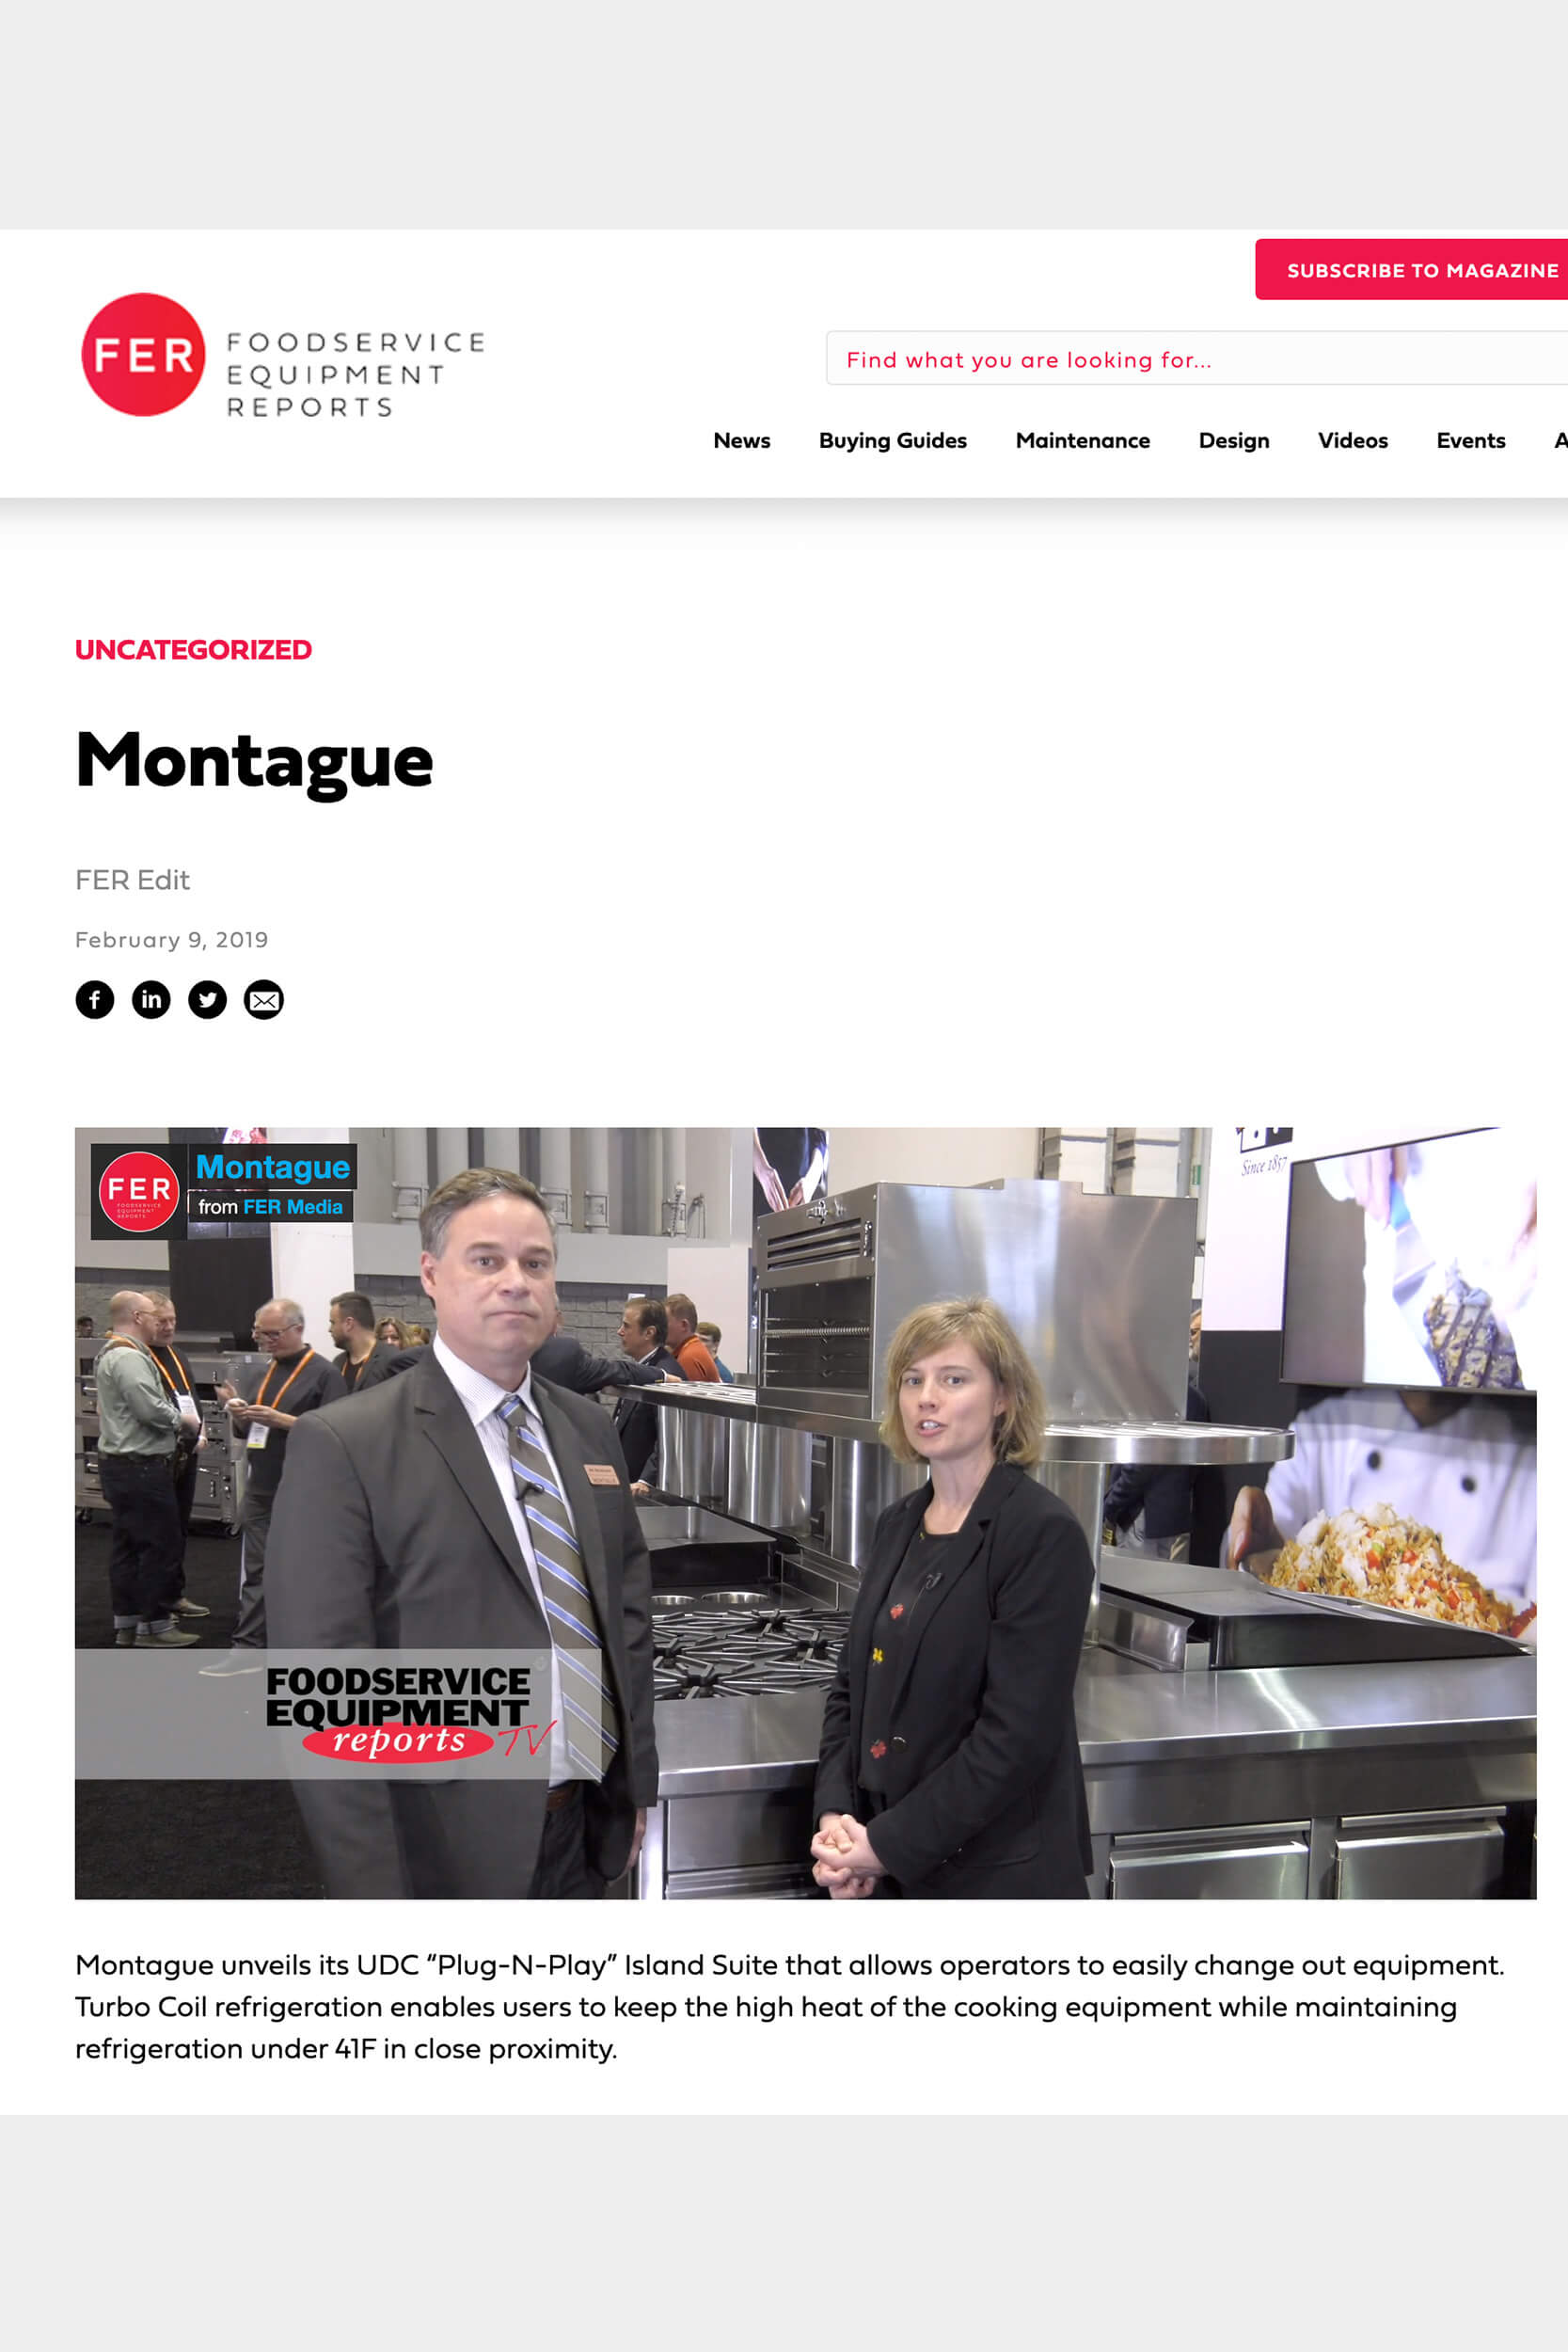 Montague debuts new UDC cooking flexible cooking suite